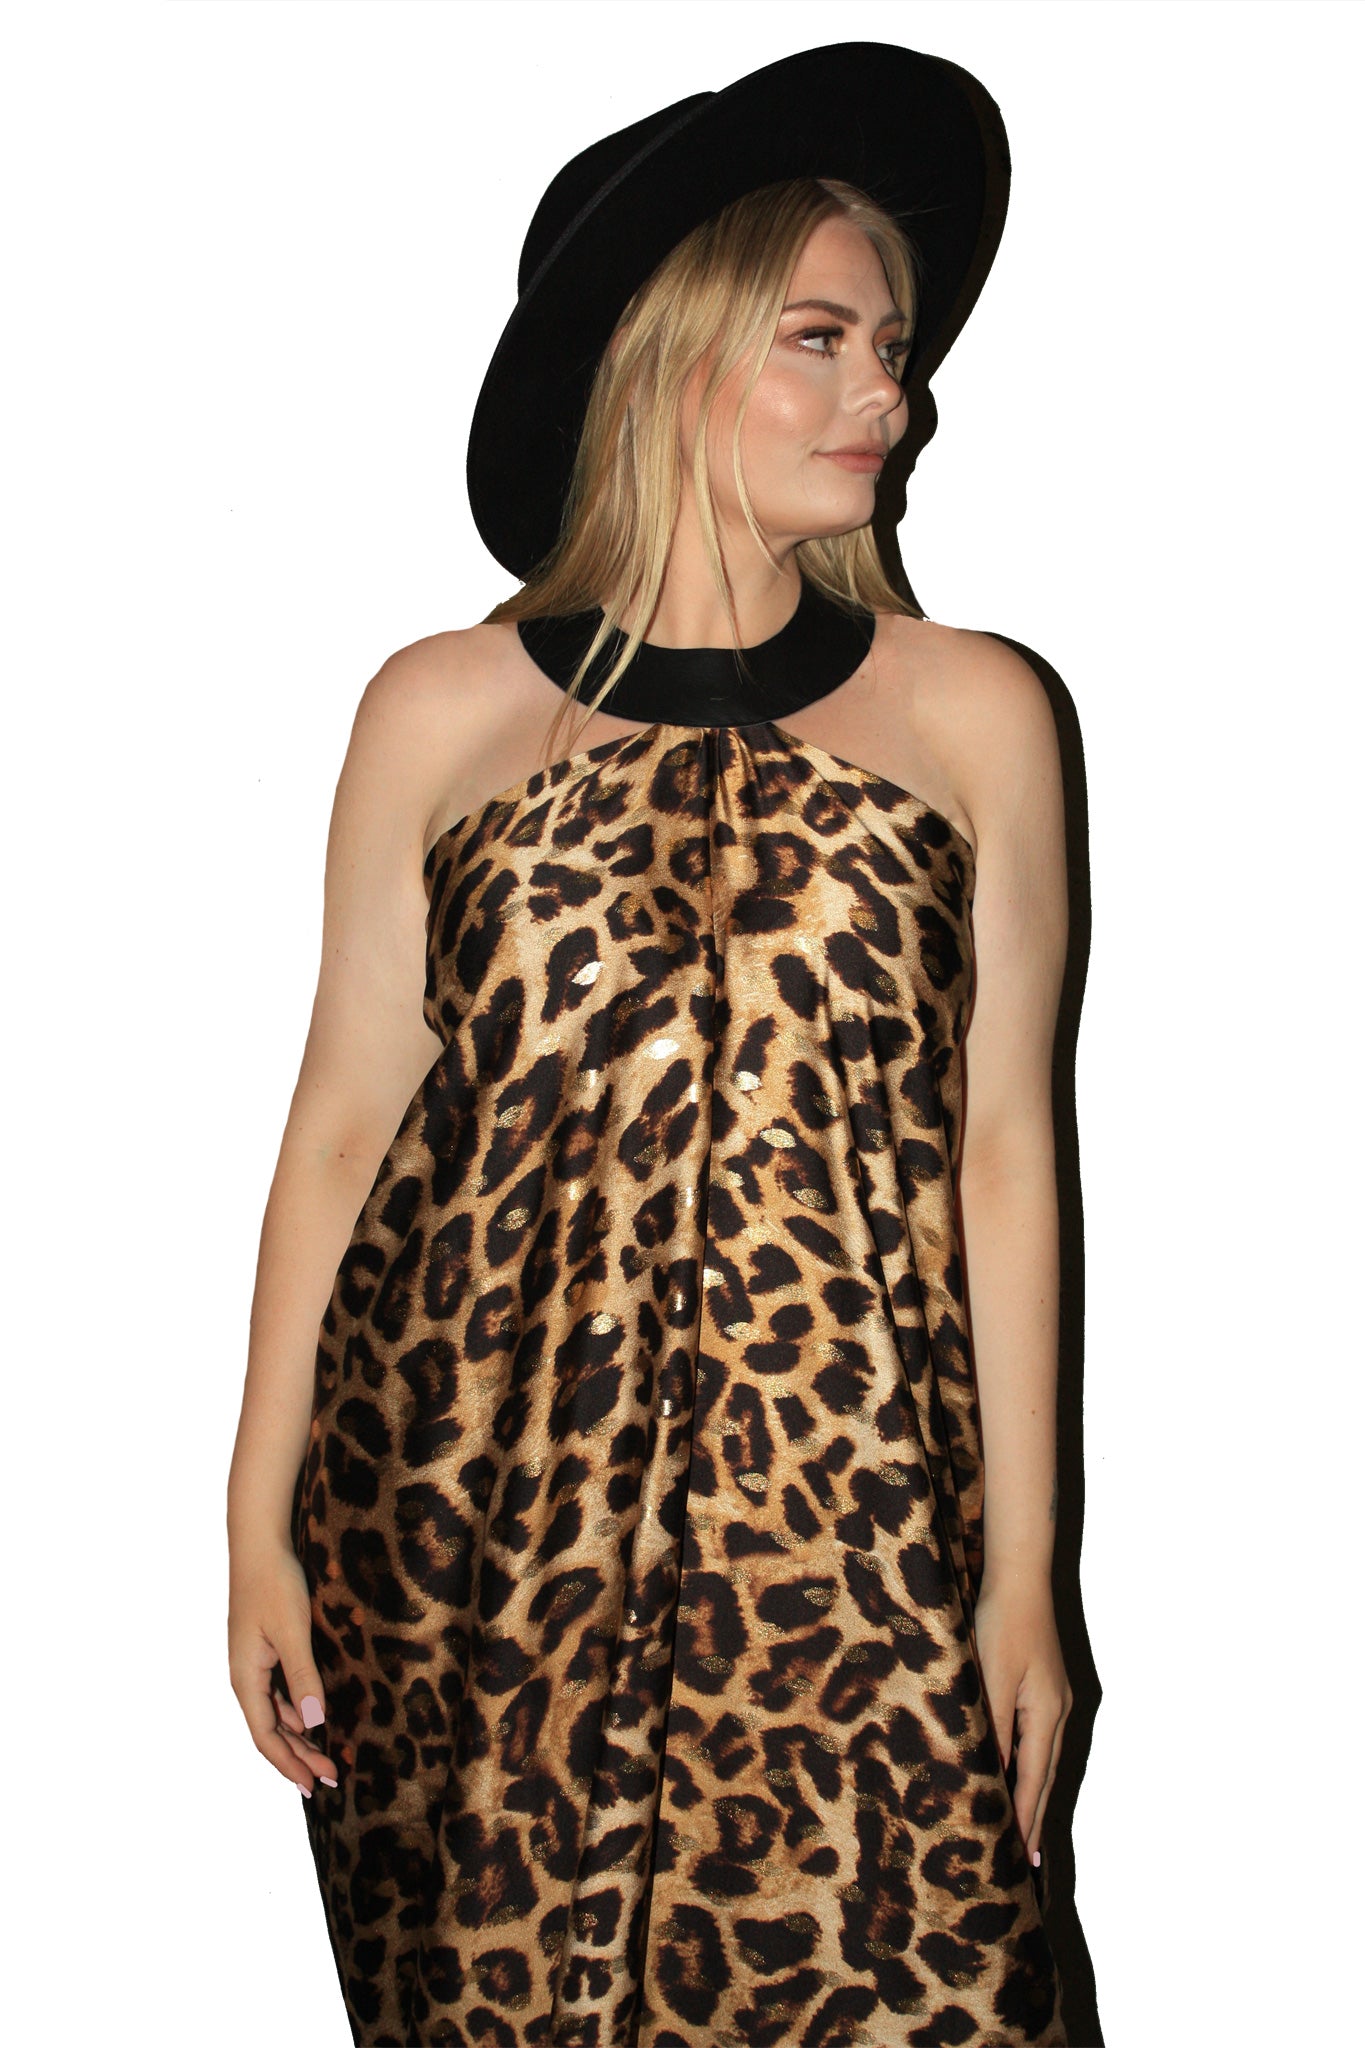 Leopard Lover Cleopatra Dress - Curve